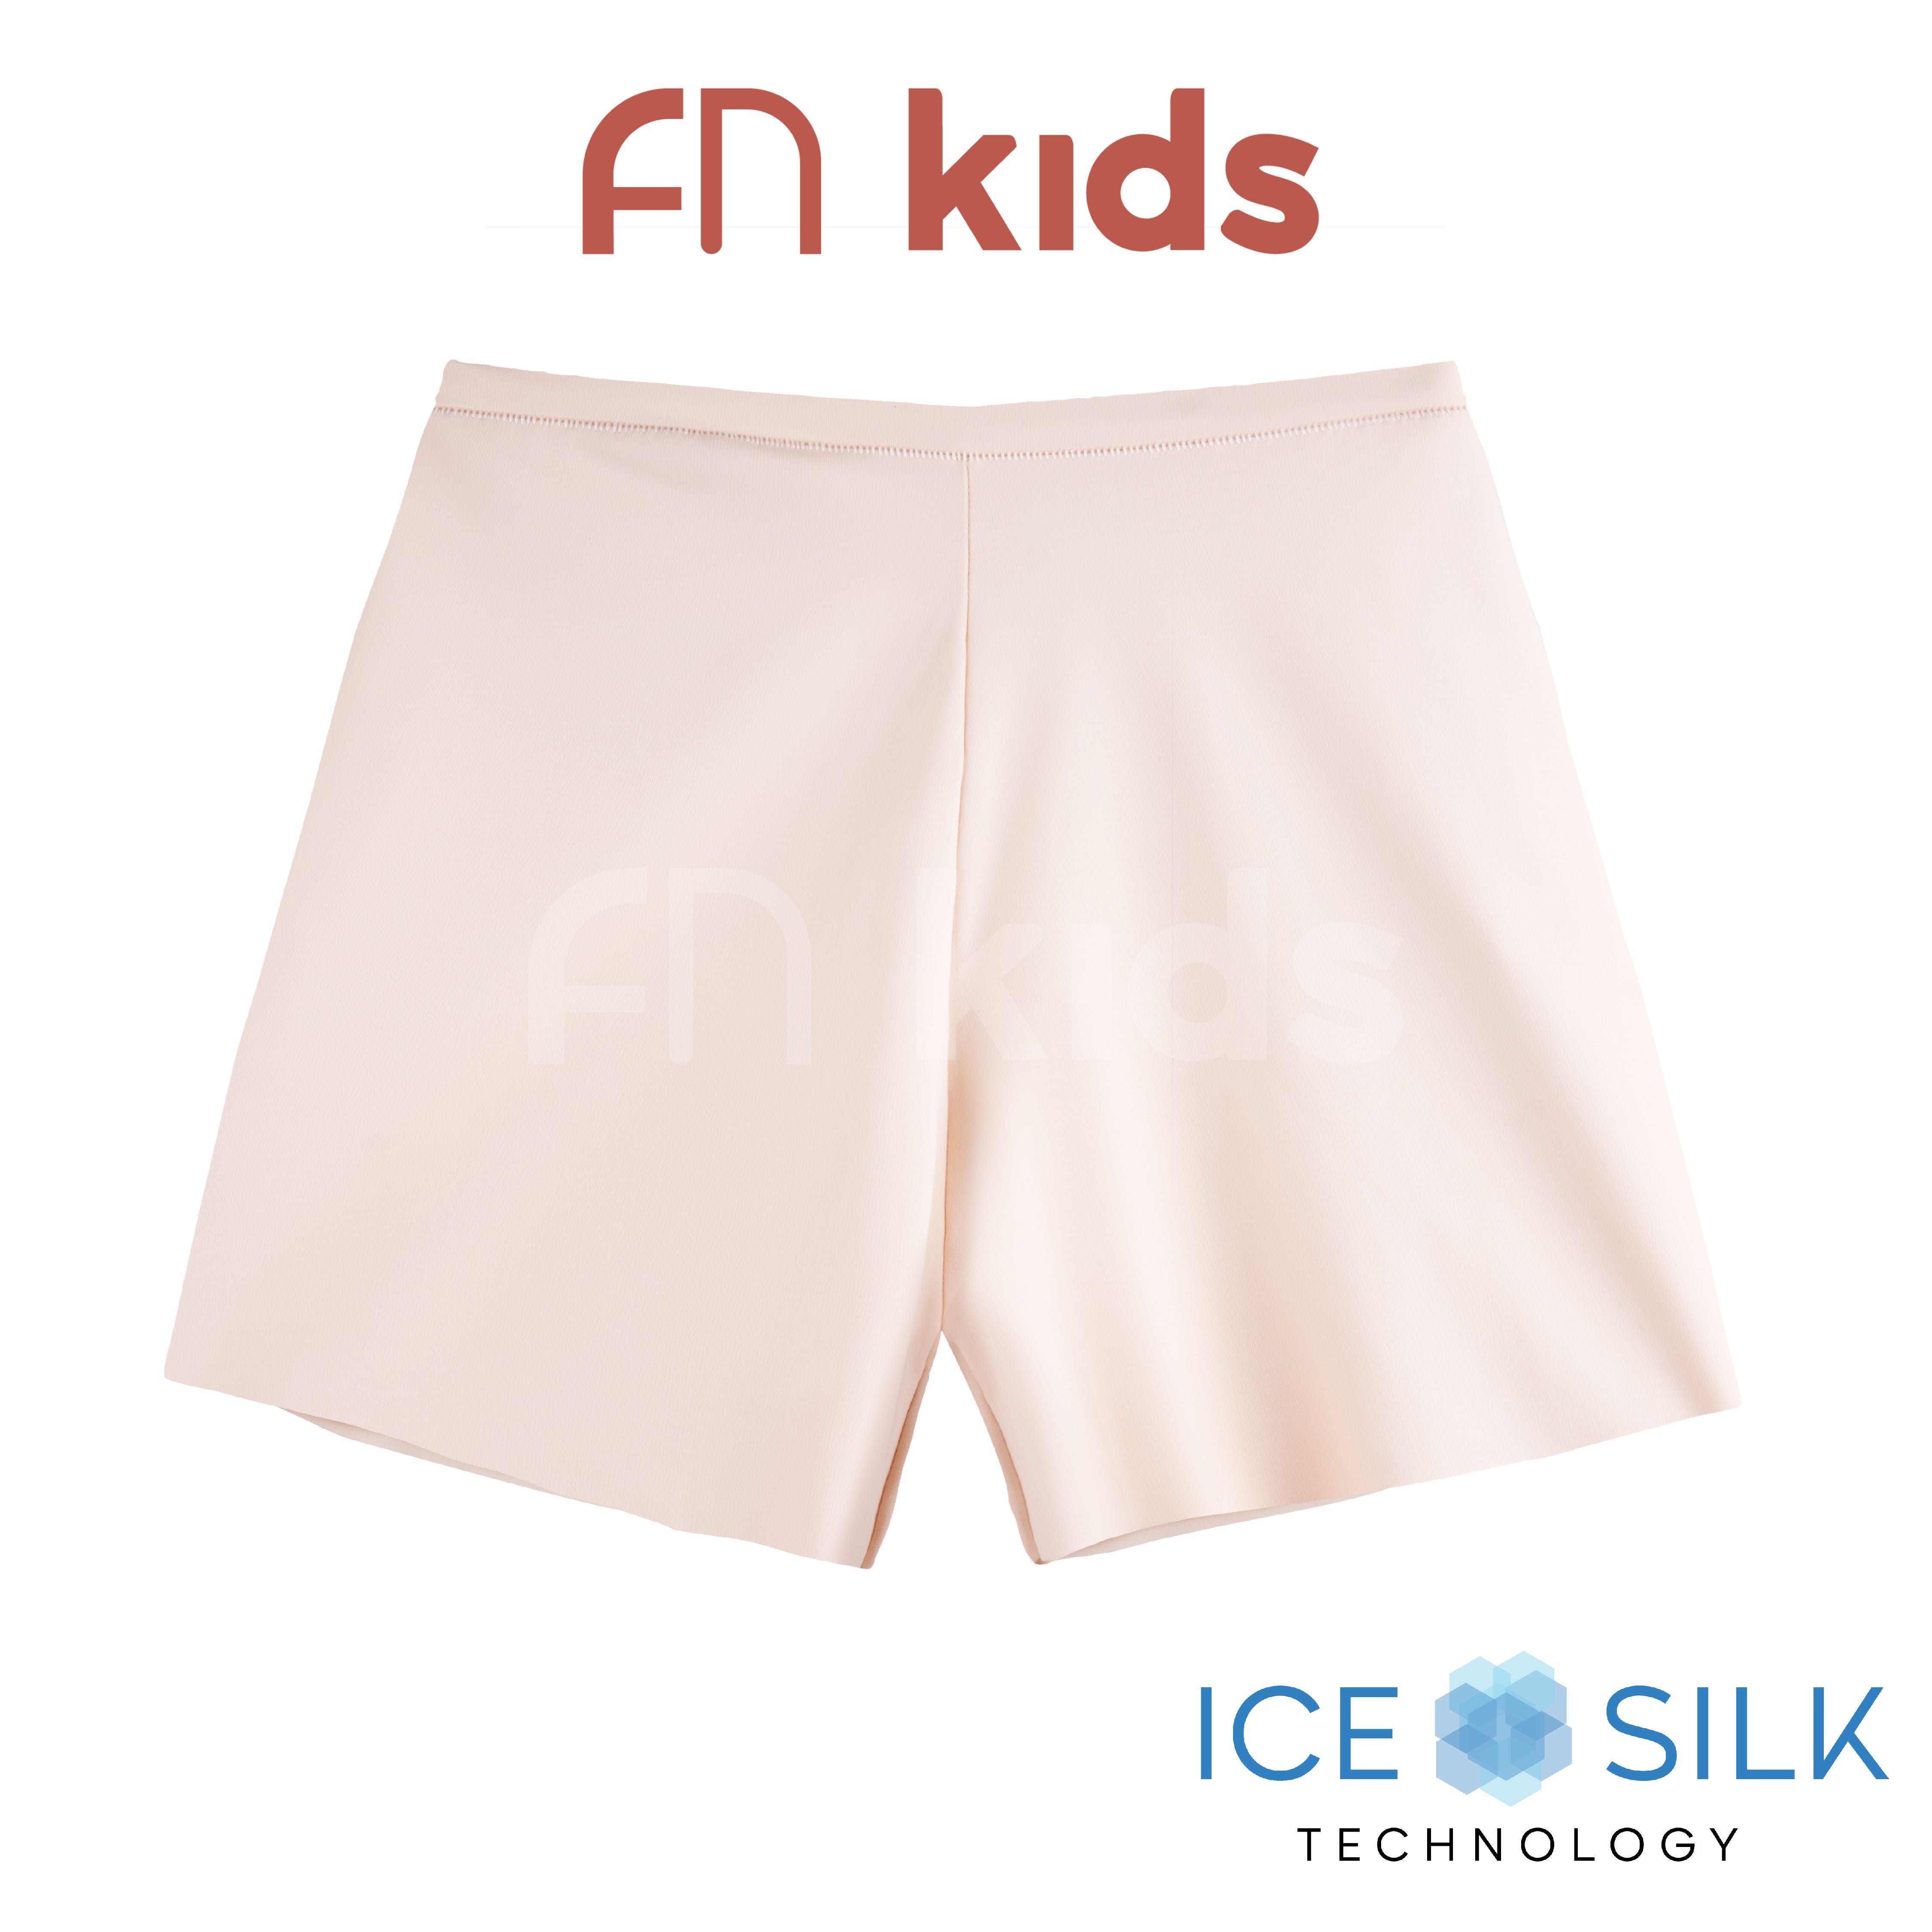 FN Kids short pants Anak Perempuan Ice Silk Celana Ketat Strit Cewek Nylon 1 Pcs NTKC 3441